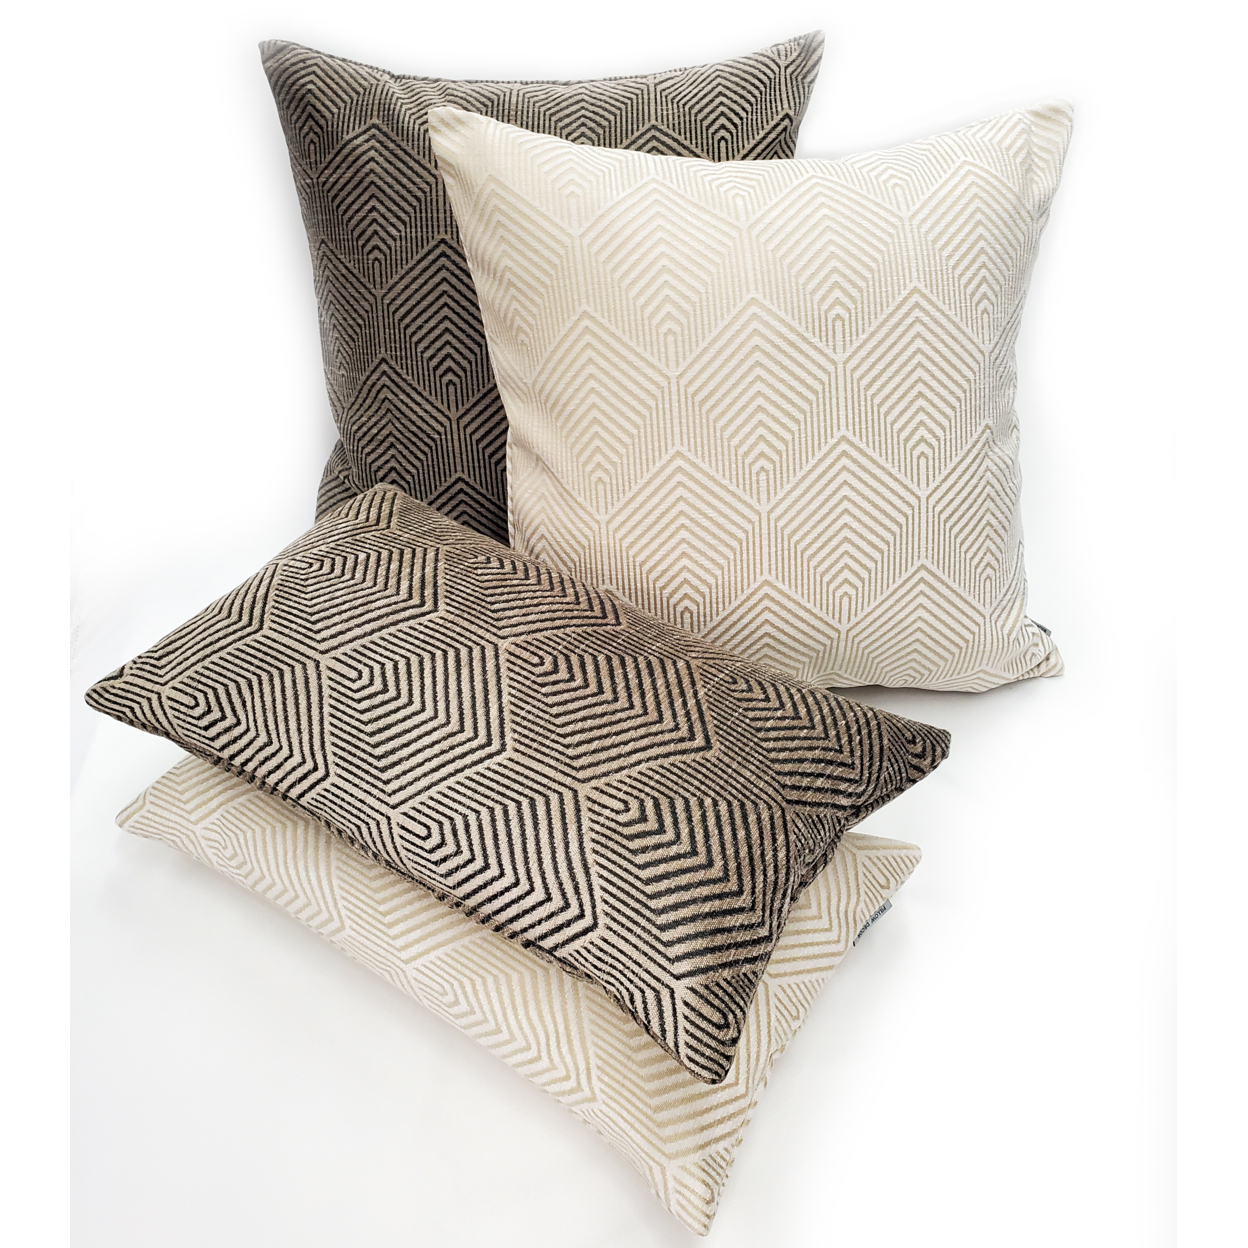 Sahara Taupe Textured Throw Pillow 20x20, With Polyfill Insert